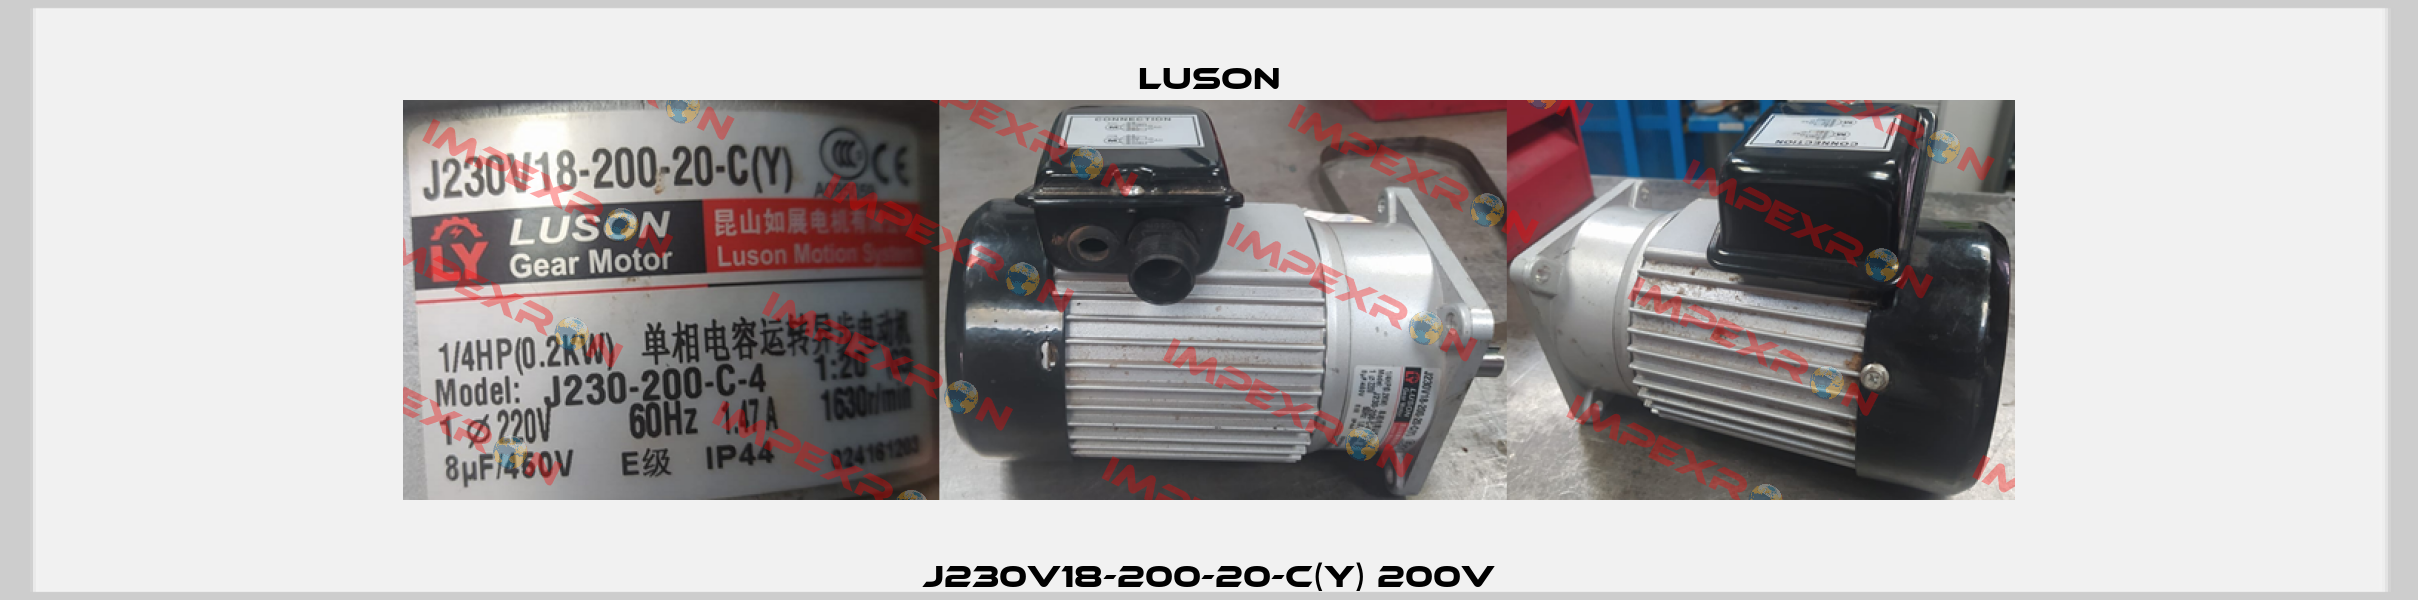 J230V18-200-20-C(Y) 200V Luson